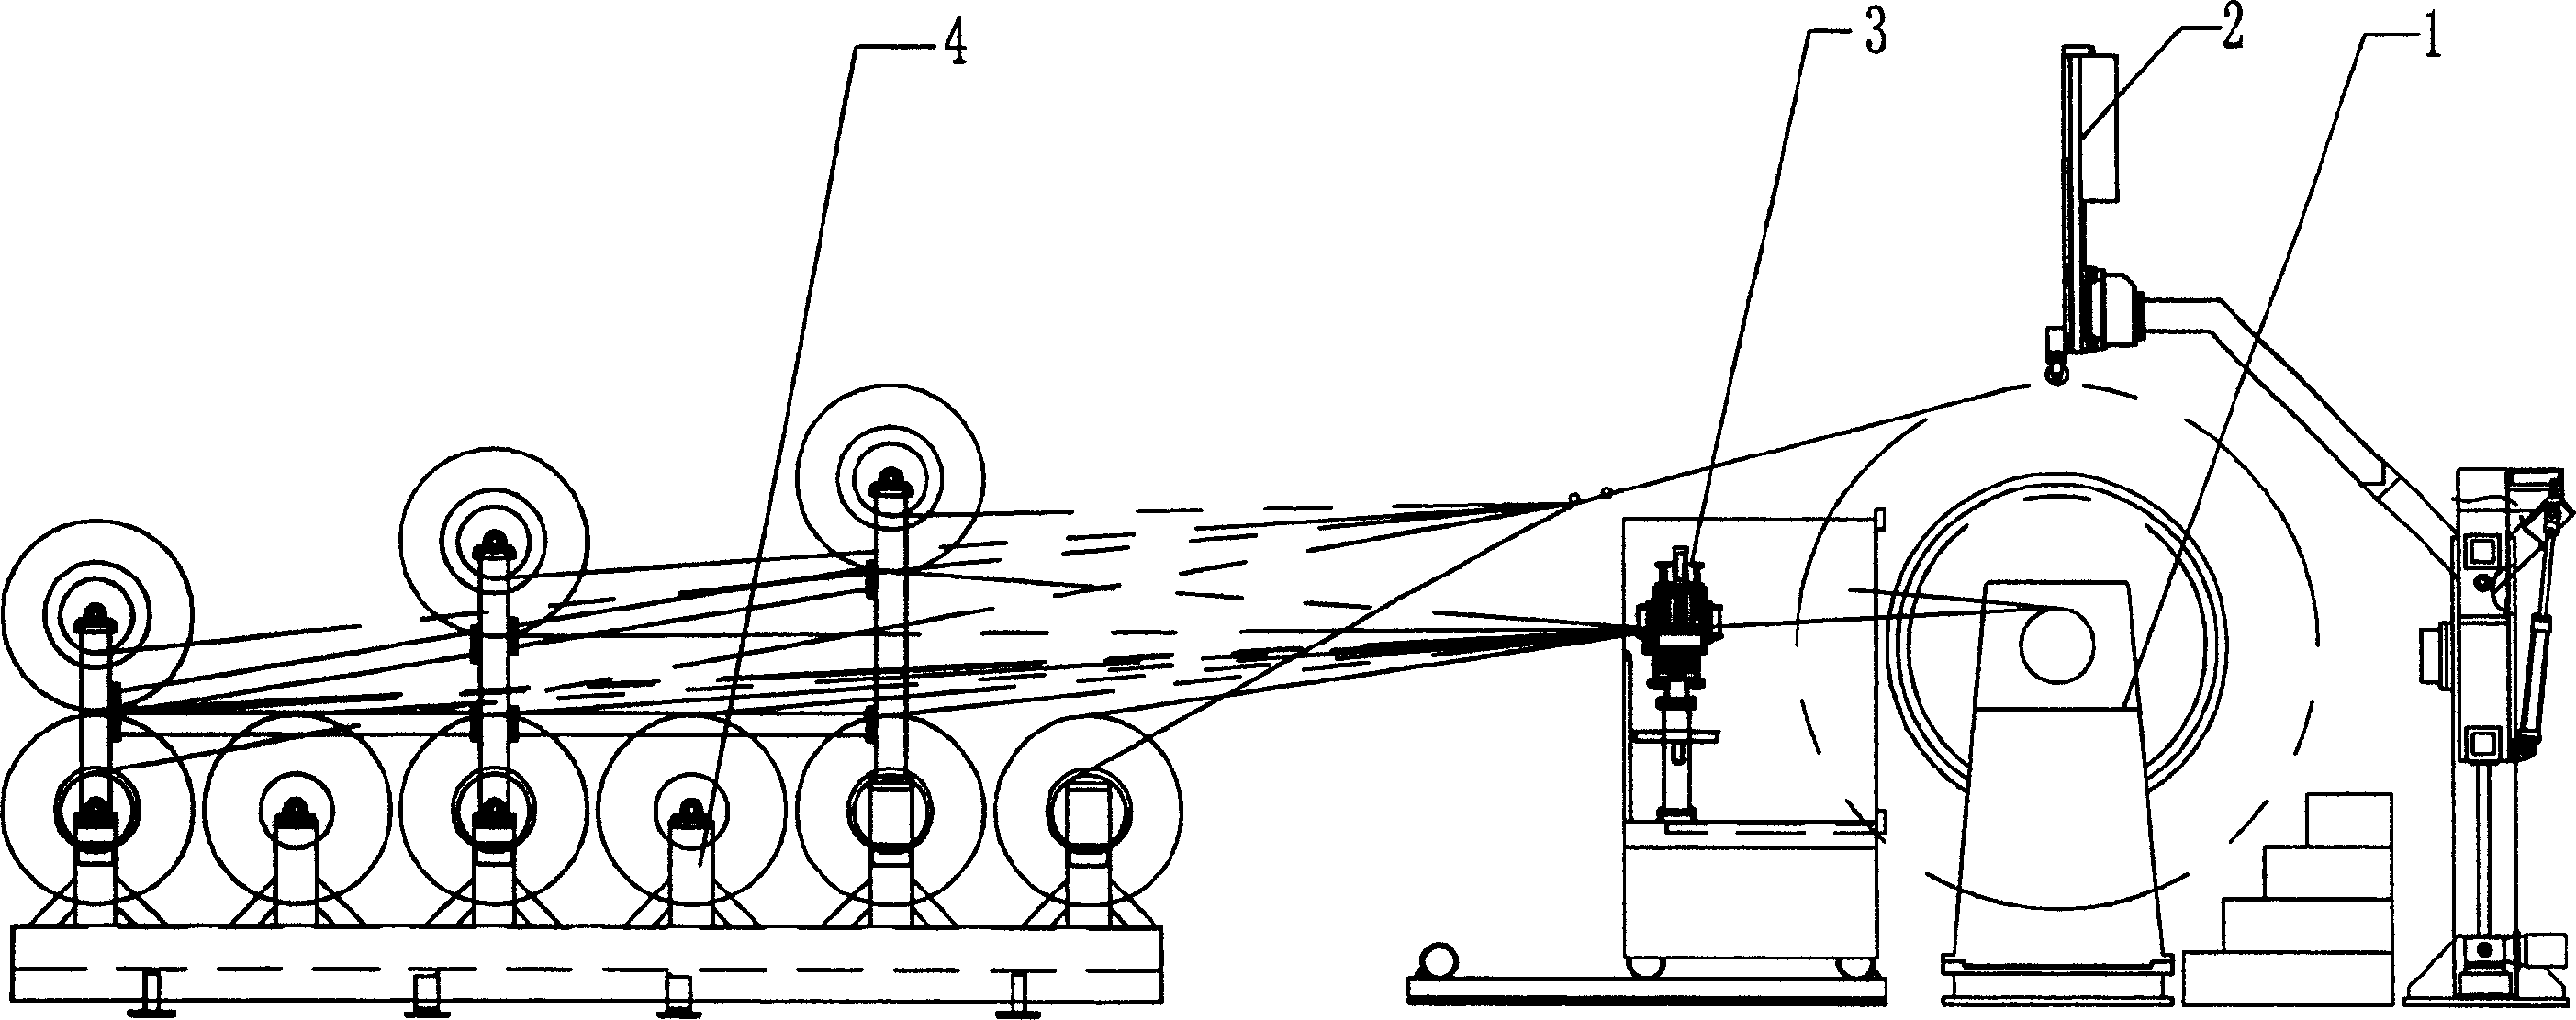 Winding machine system